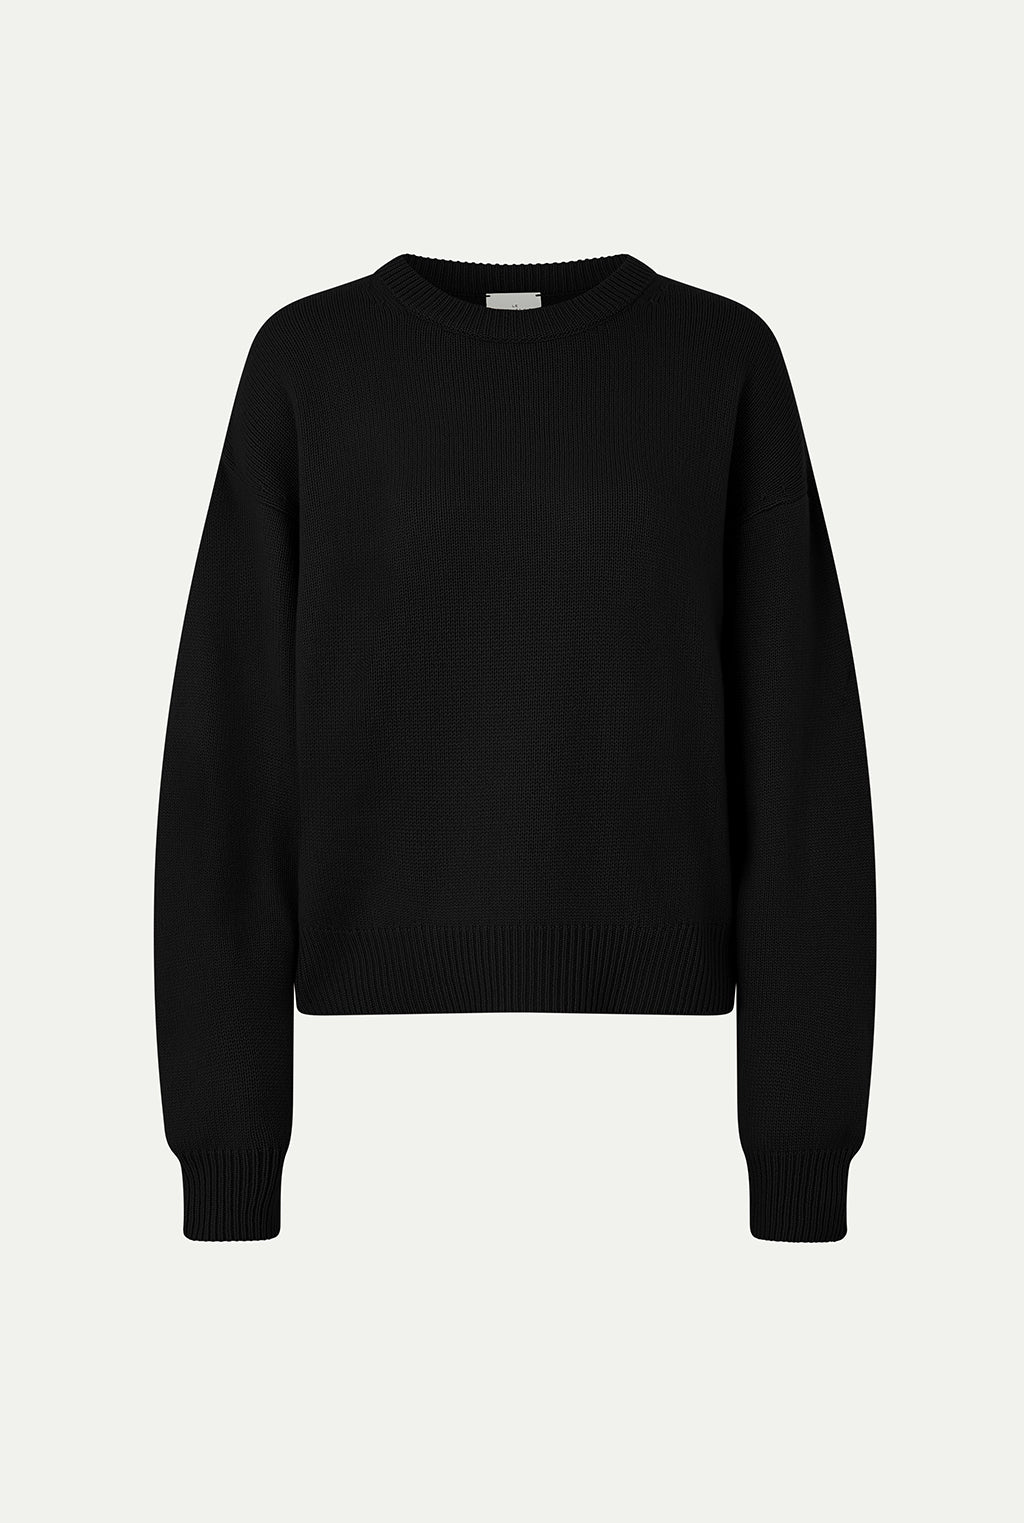 YESOU cashmere sweater